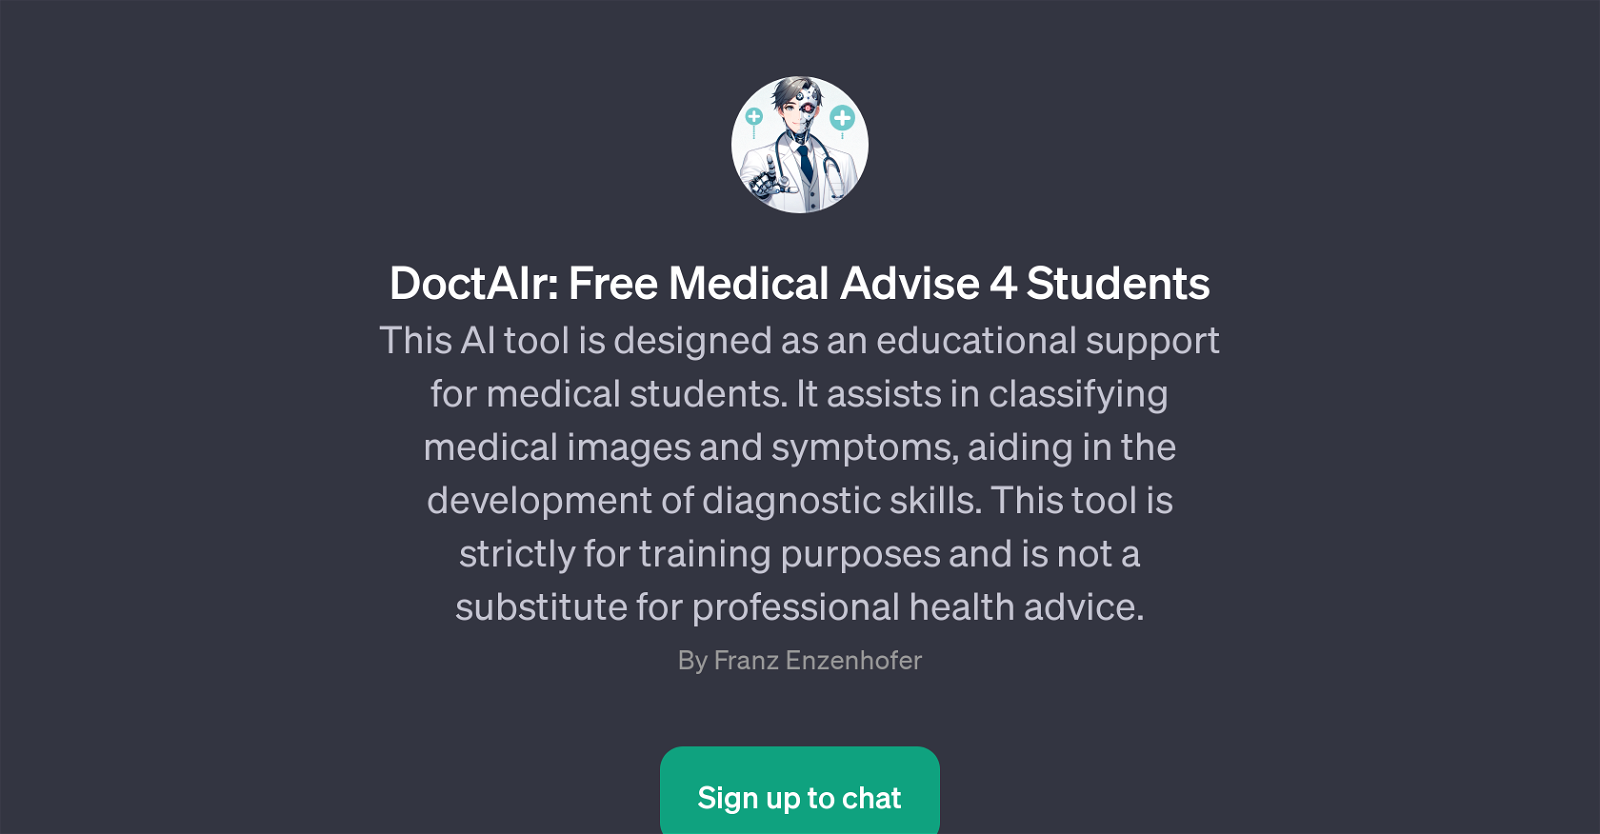 DoctAIr website